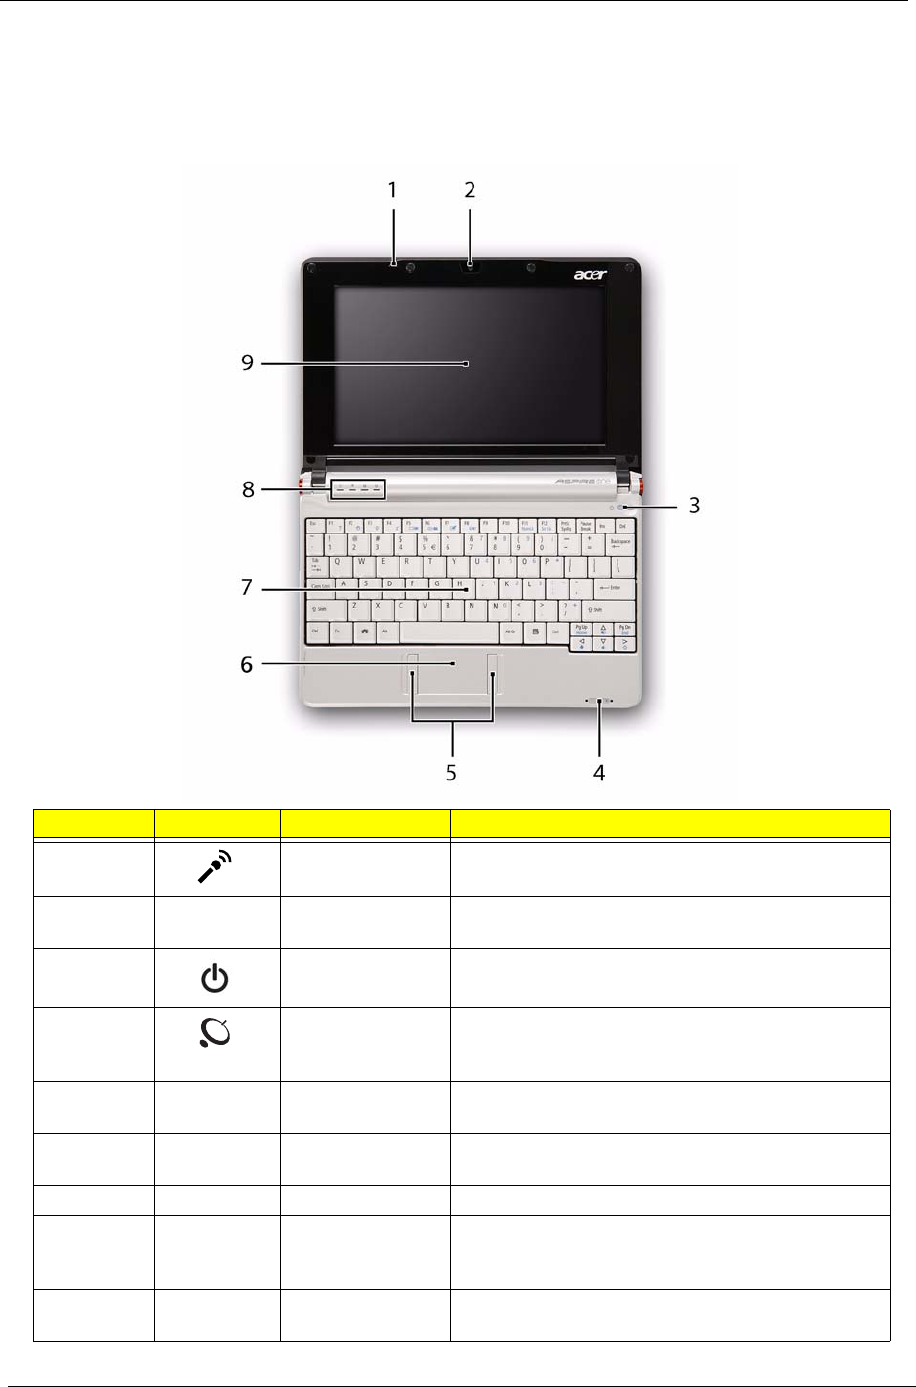 1TB 2.5 Laptop Hard Drive for Toshiba Satellite M645-S4070 M645-S4080 M645-S4110 M645-S4112 M645-S4114